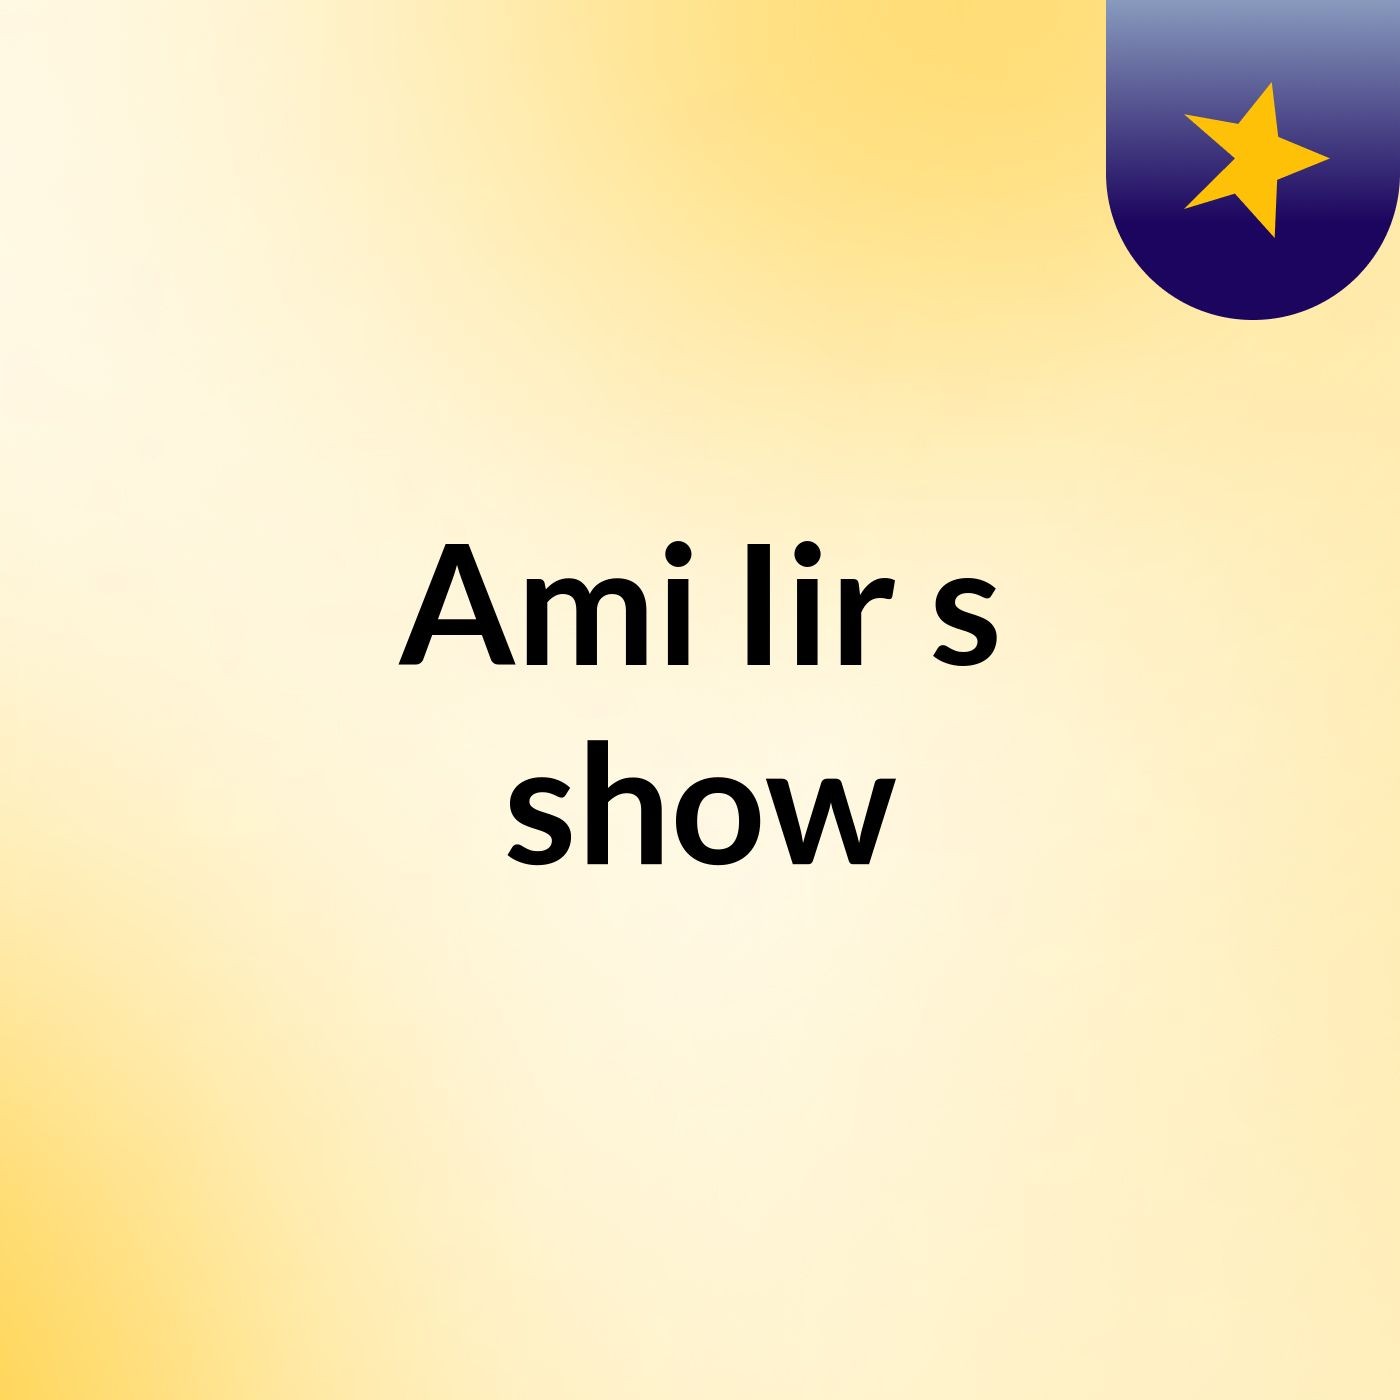 Ami Iir's show